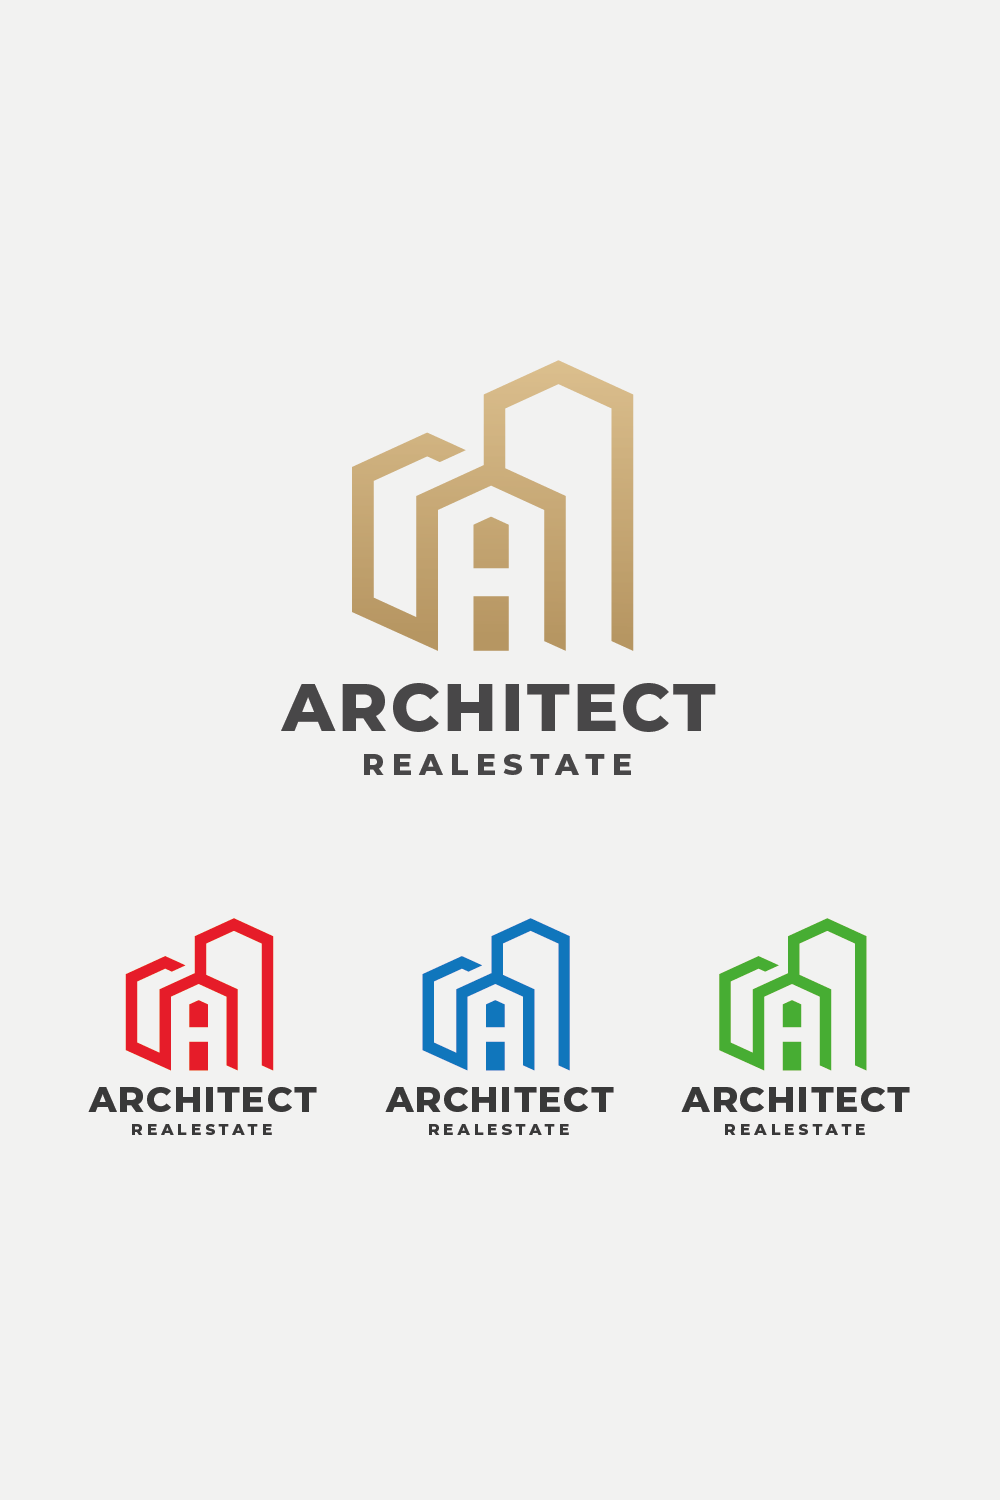 Building Architect Latter A Logo pinterest preview image.